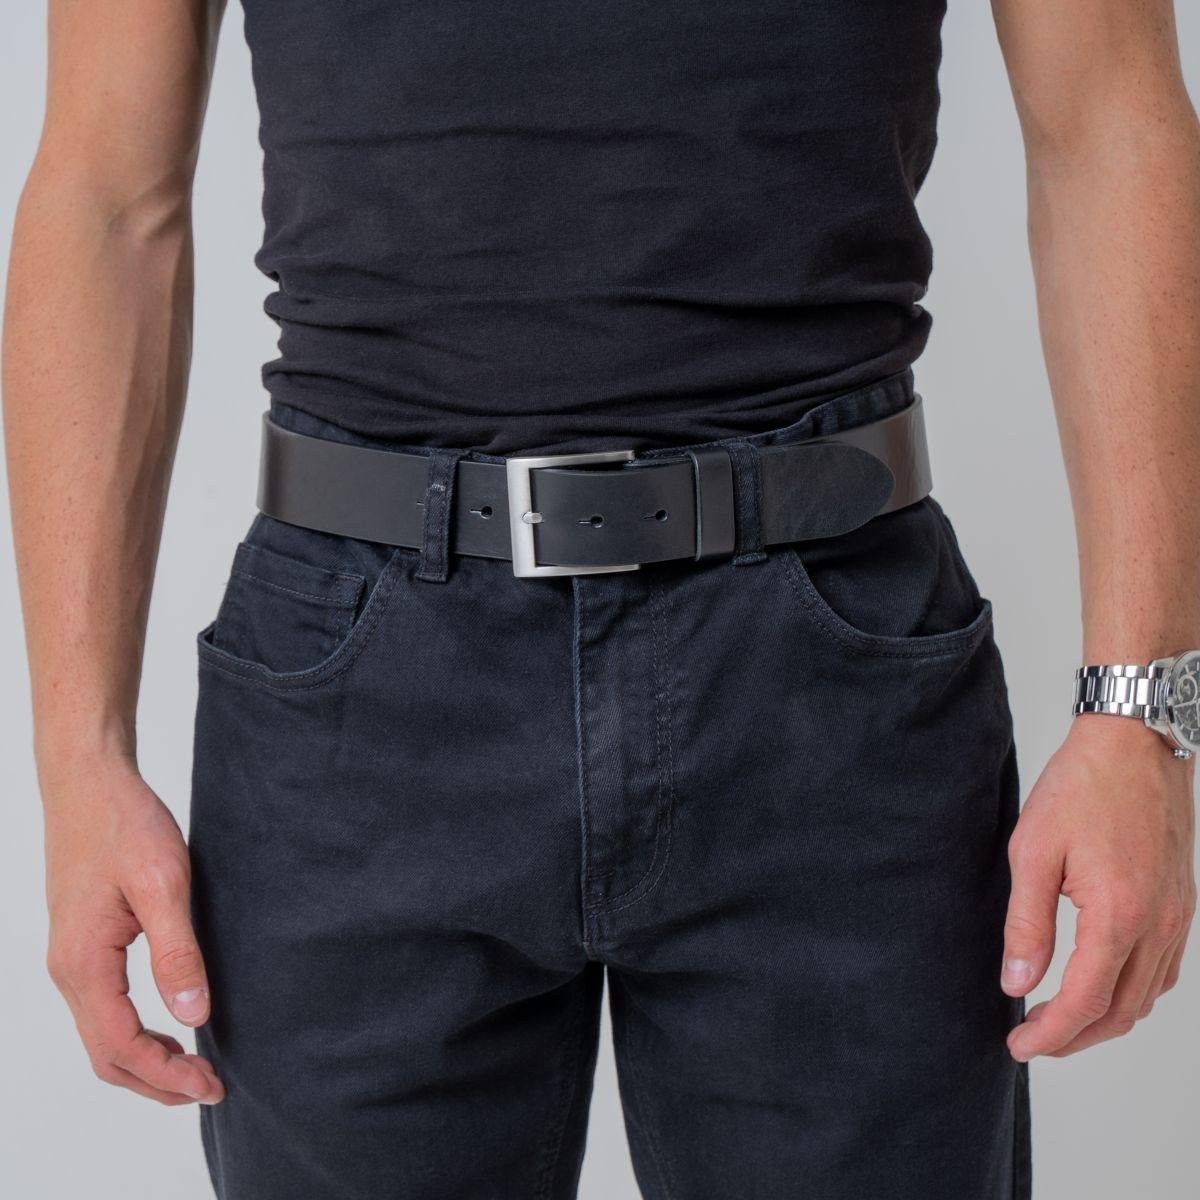 BELTINGER Silber Jeans-Gürtel Vollrindleder 4 cm Ledergürtel Bordeaux, Leder-Gürtel aus Hochwertiger für - He